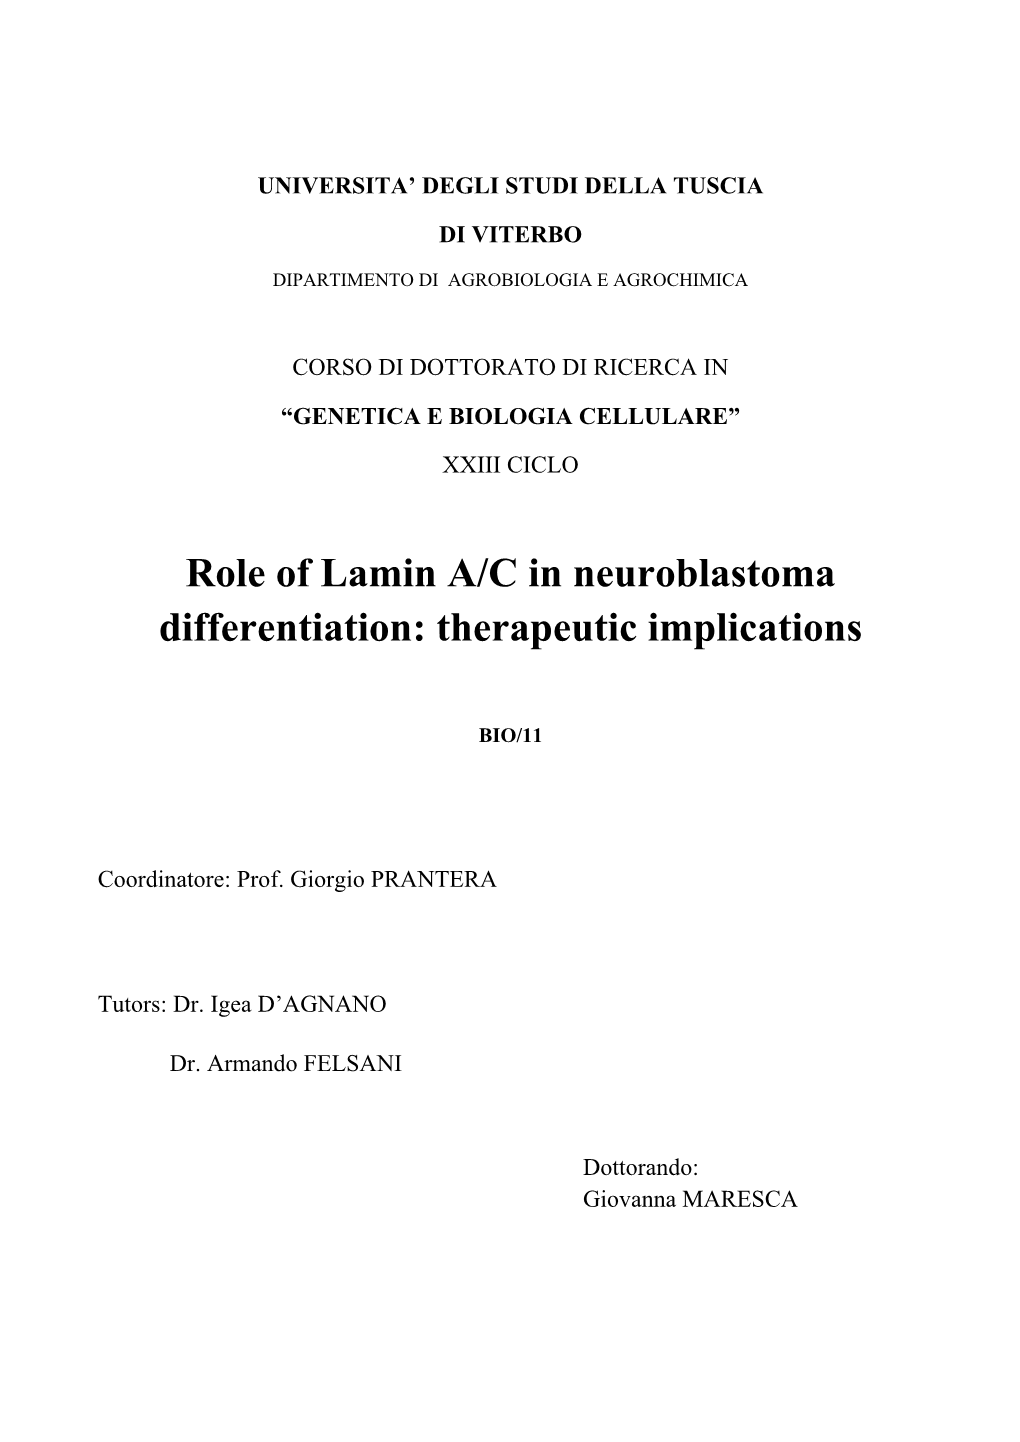 Role of Lamin A/C in Neuroblastoma Differentiation: Therapeutic Implications